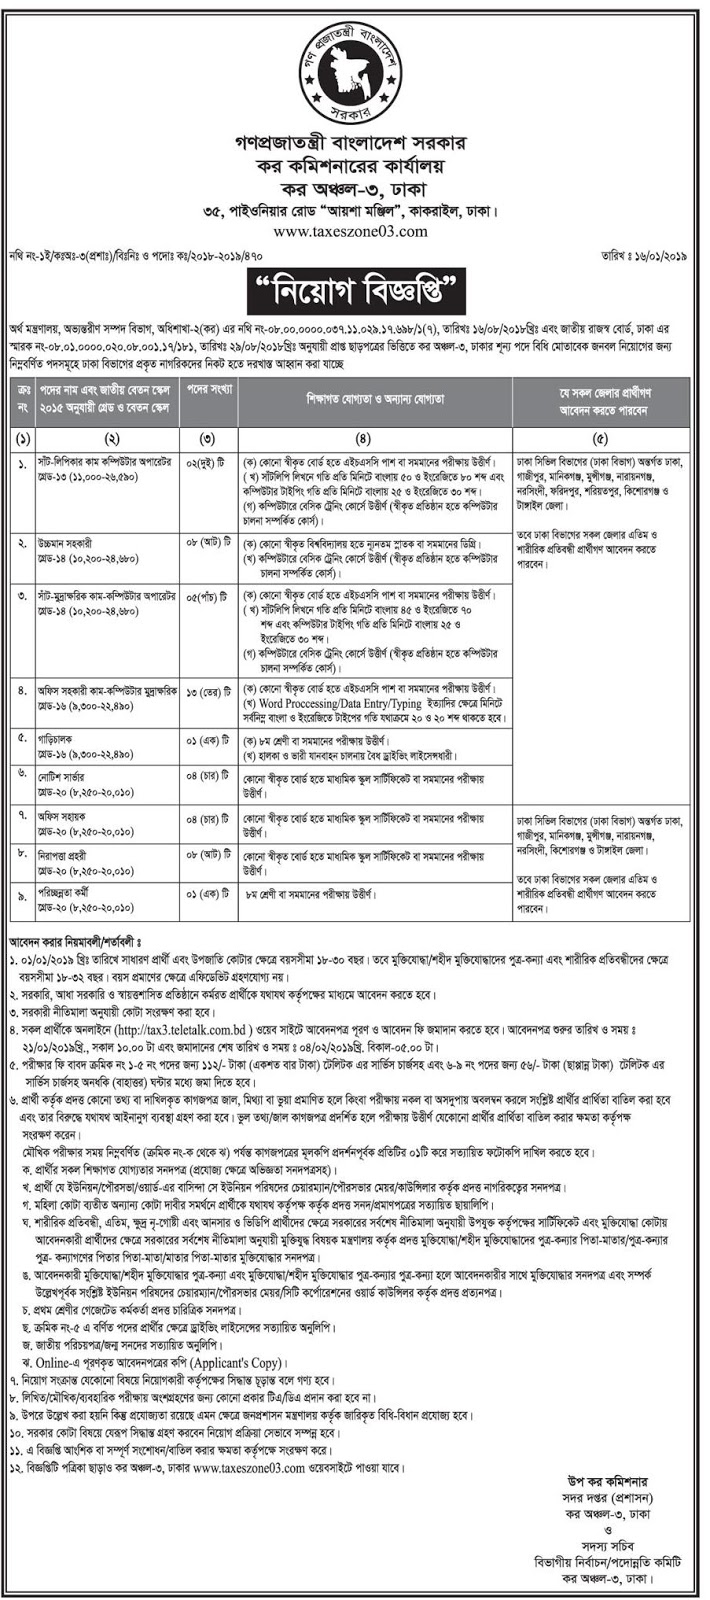 Taxes Zone 03, Dhaka Job Circular 2019